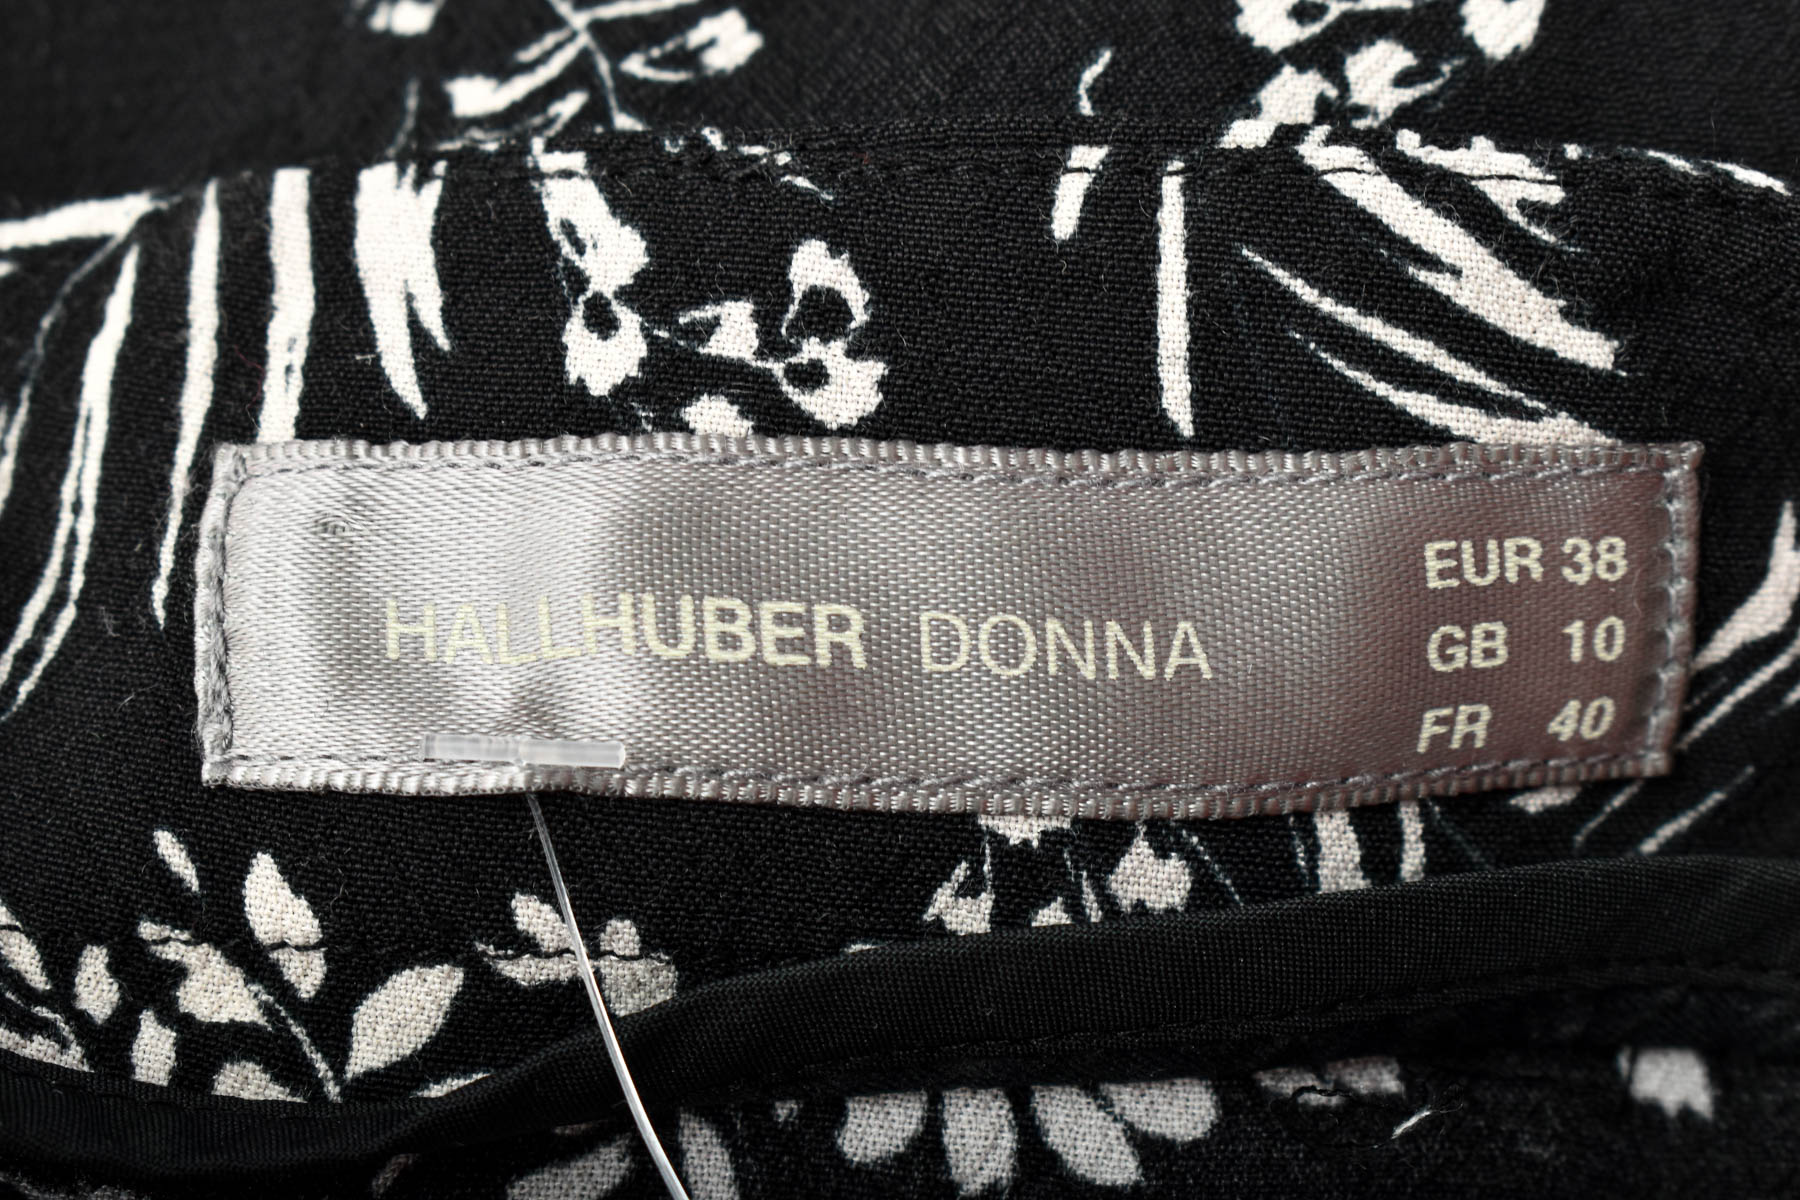 Skirt - HALLHUBER DONNA - 2